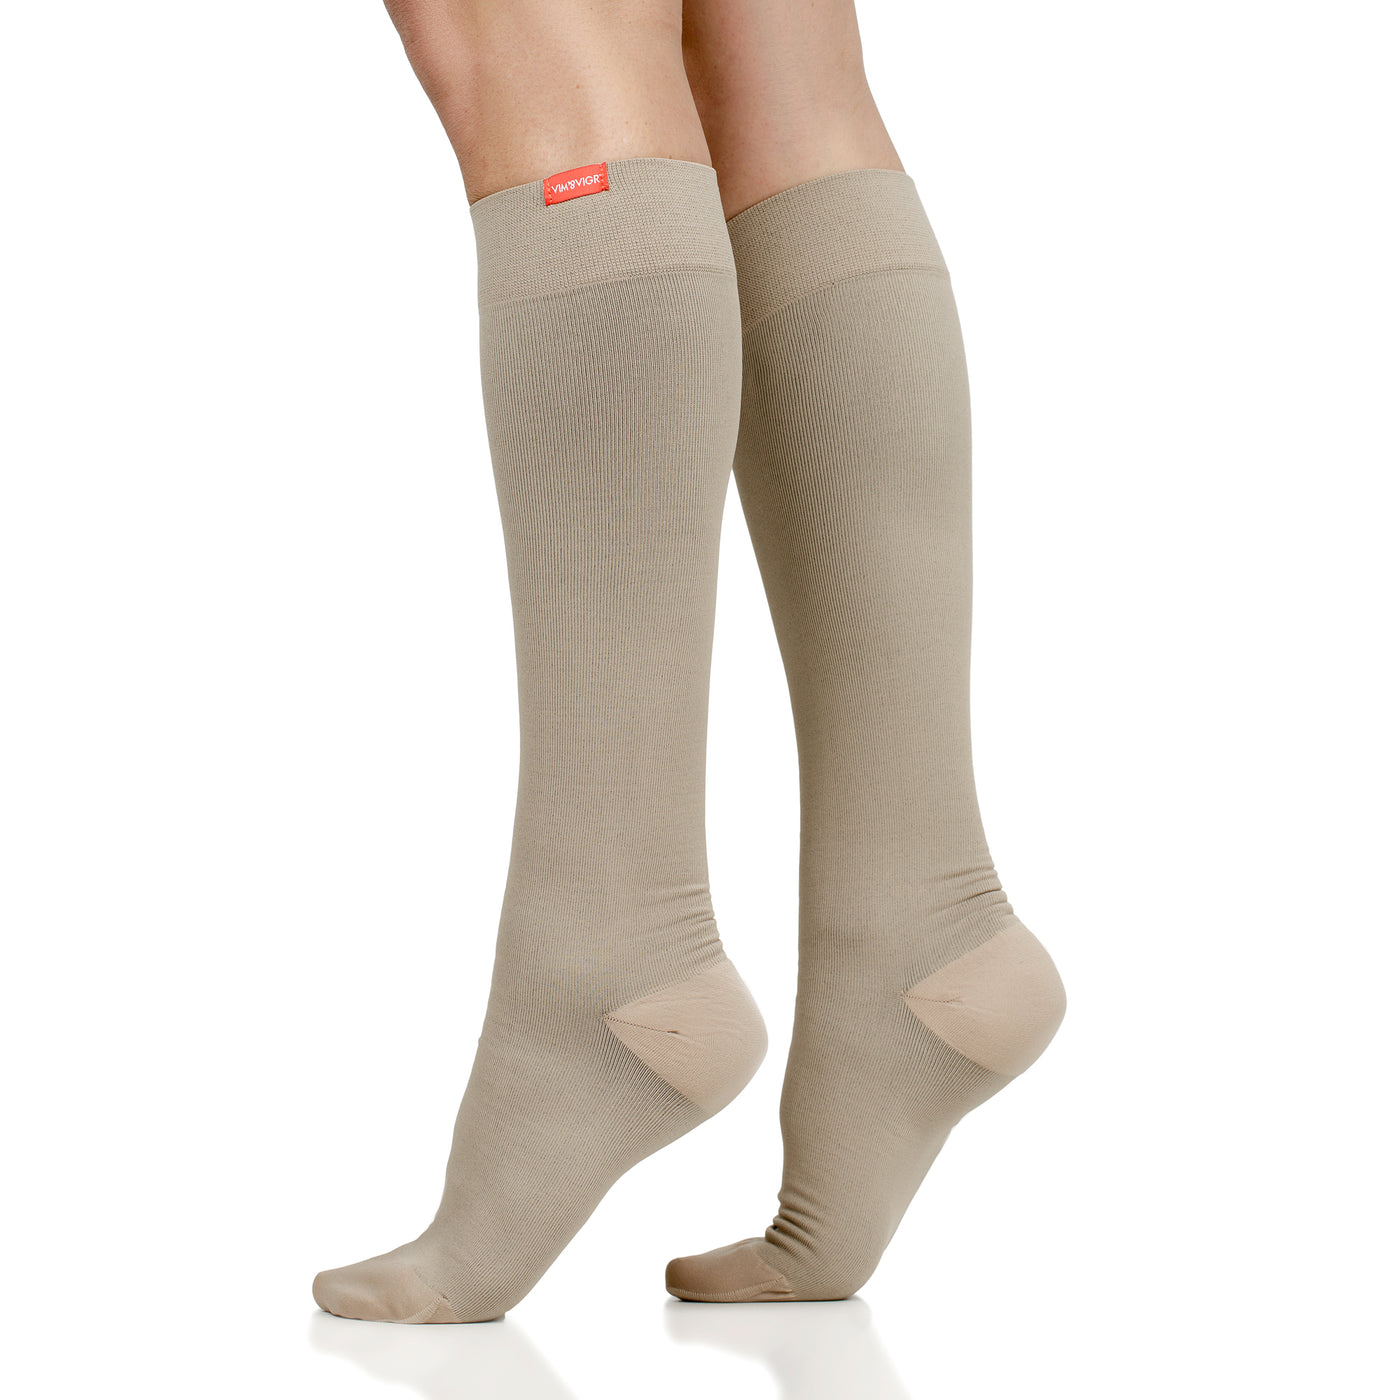 15-20 mmHg: Solid Cashew (Moisture-wick Nylon) compression socks for men & women